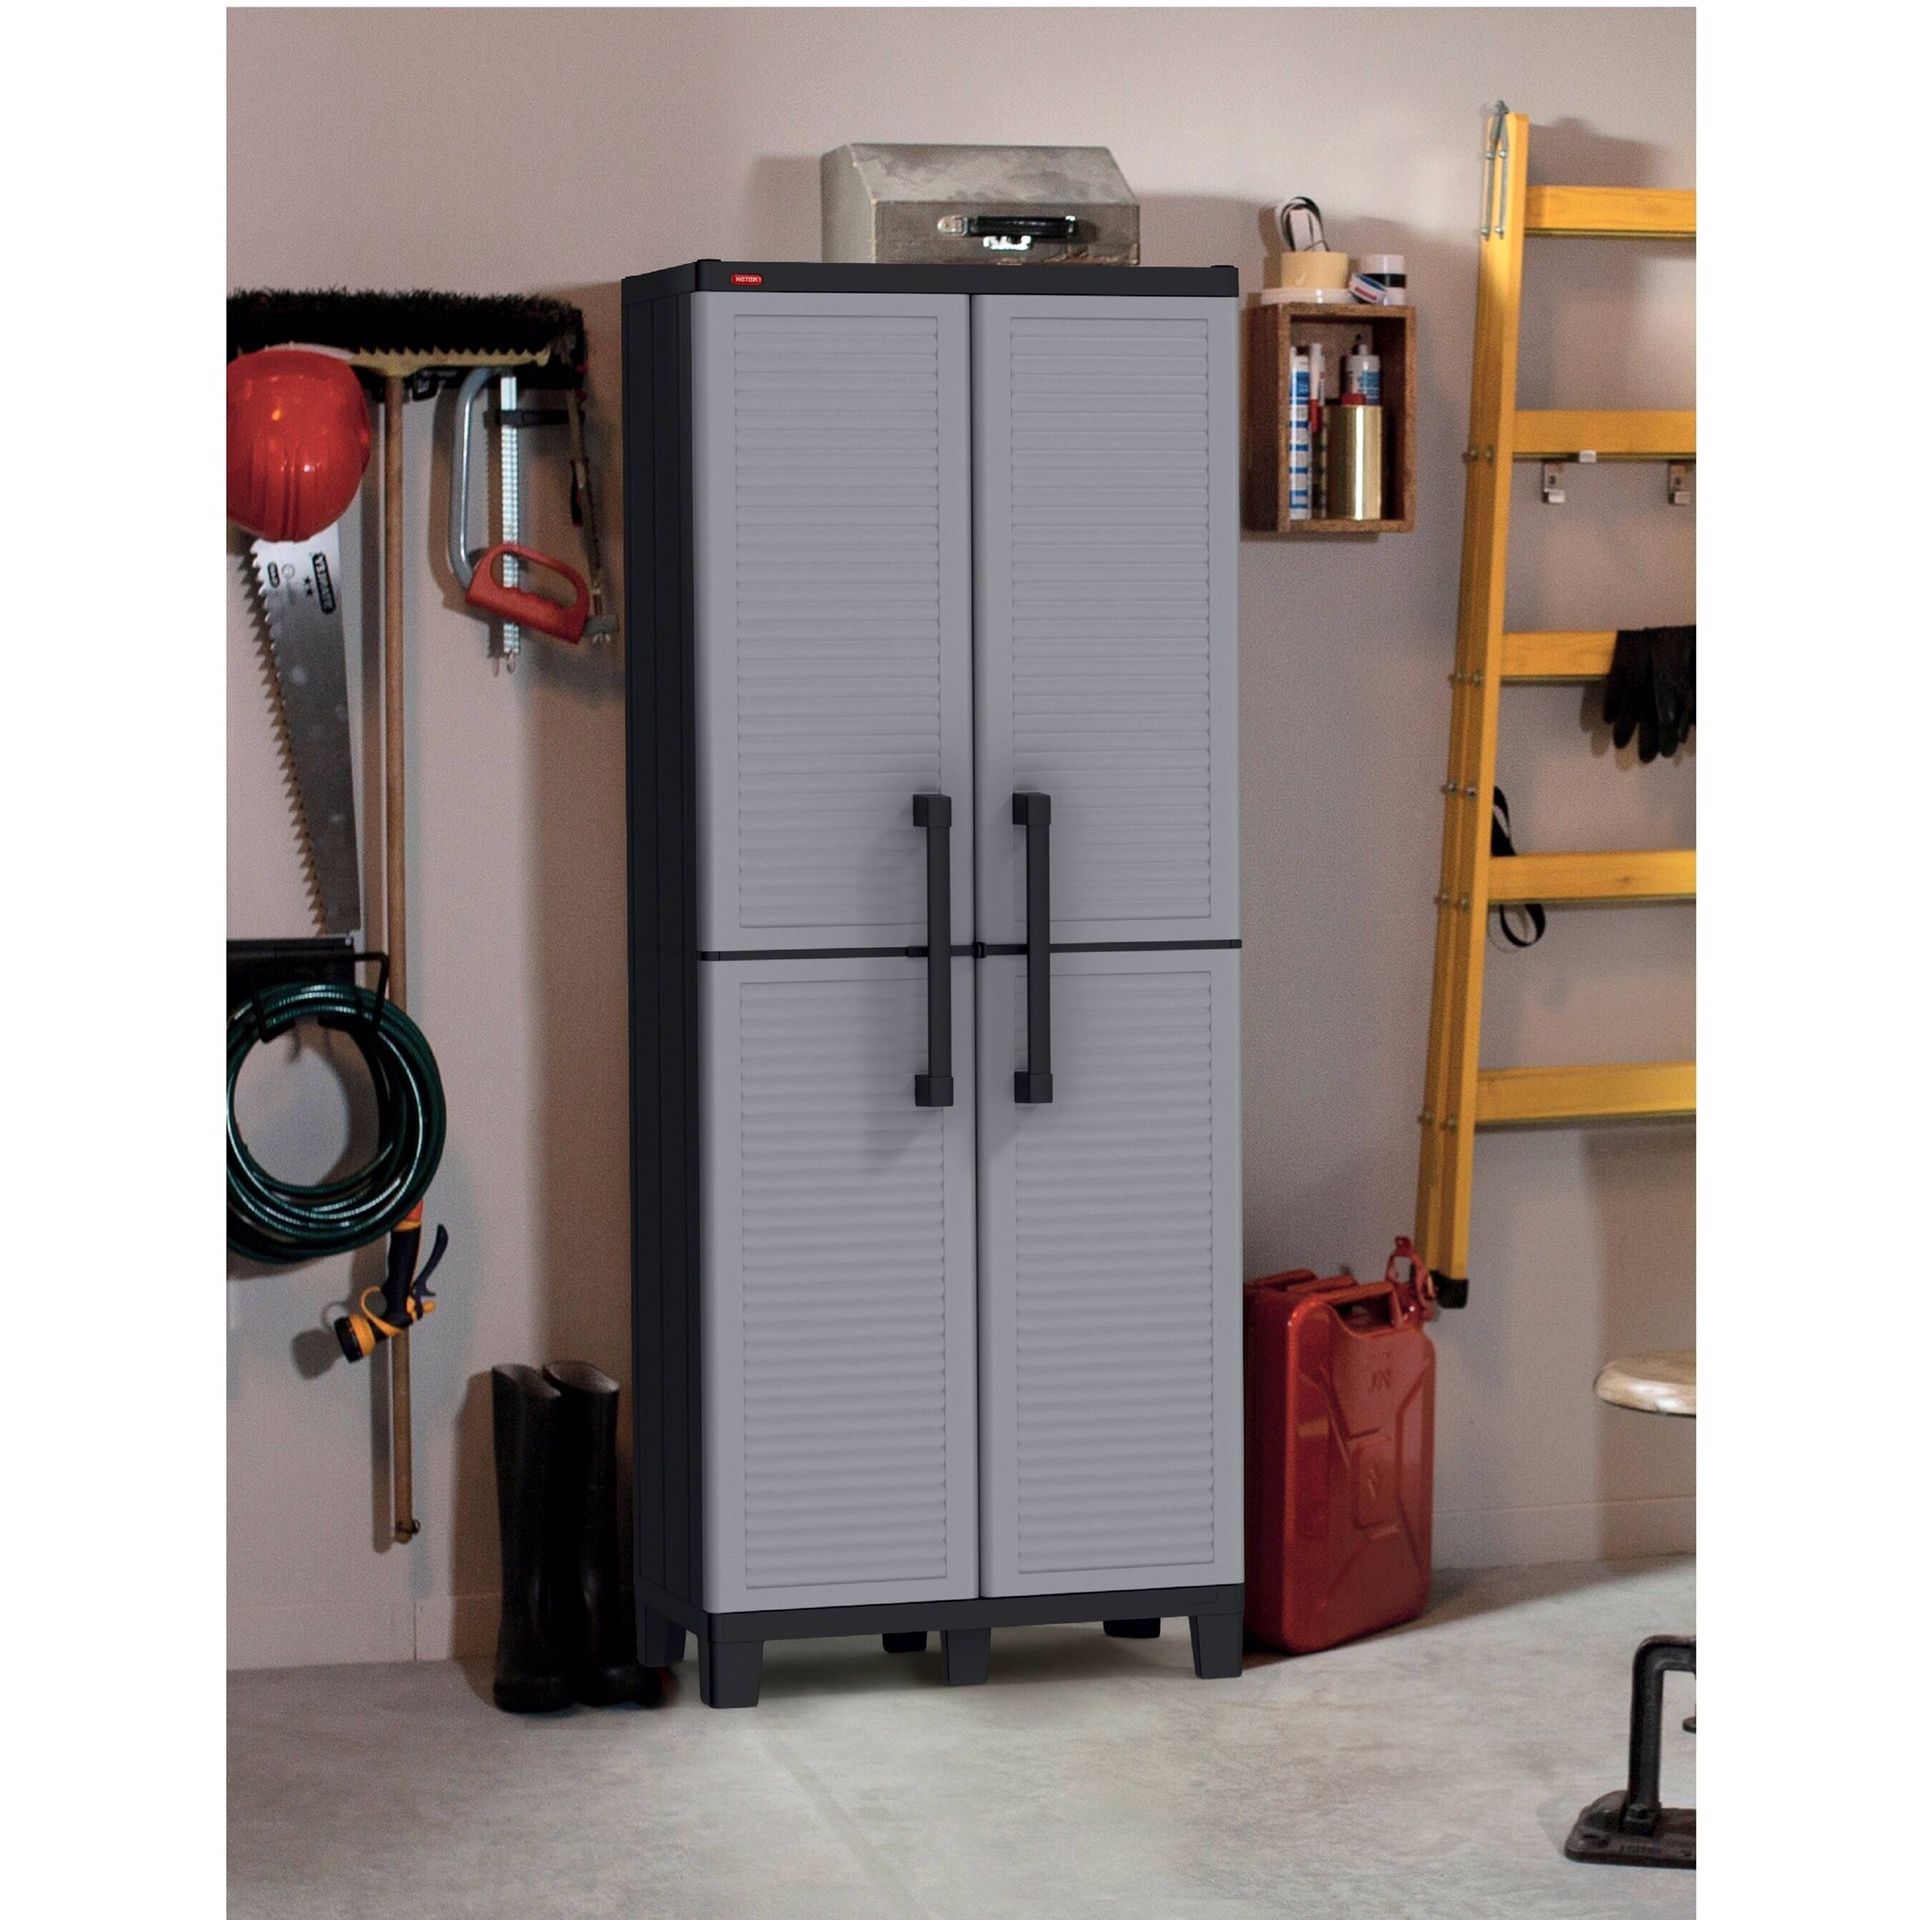 BRAND NEW- Plastic Utility Cabinet - Keter Space Winner Resin Storage